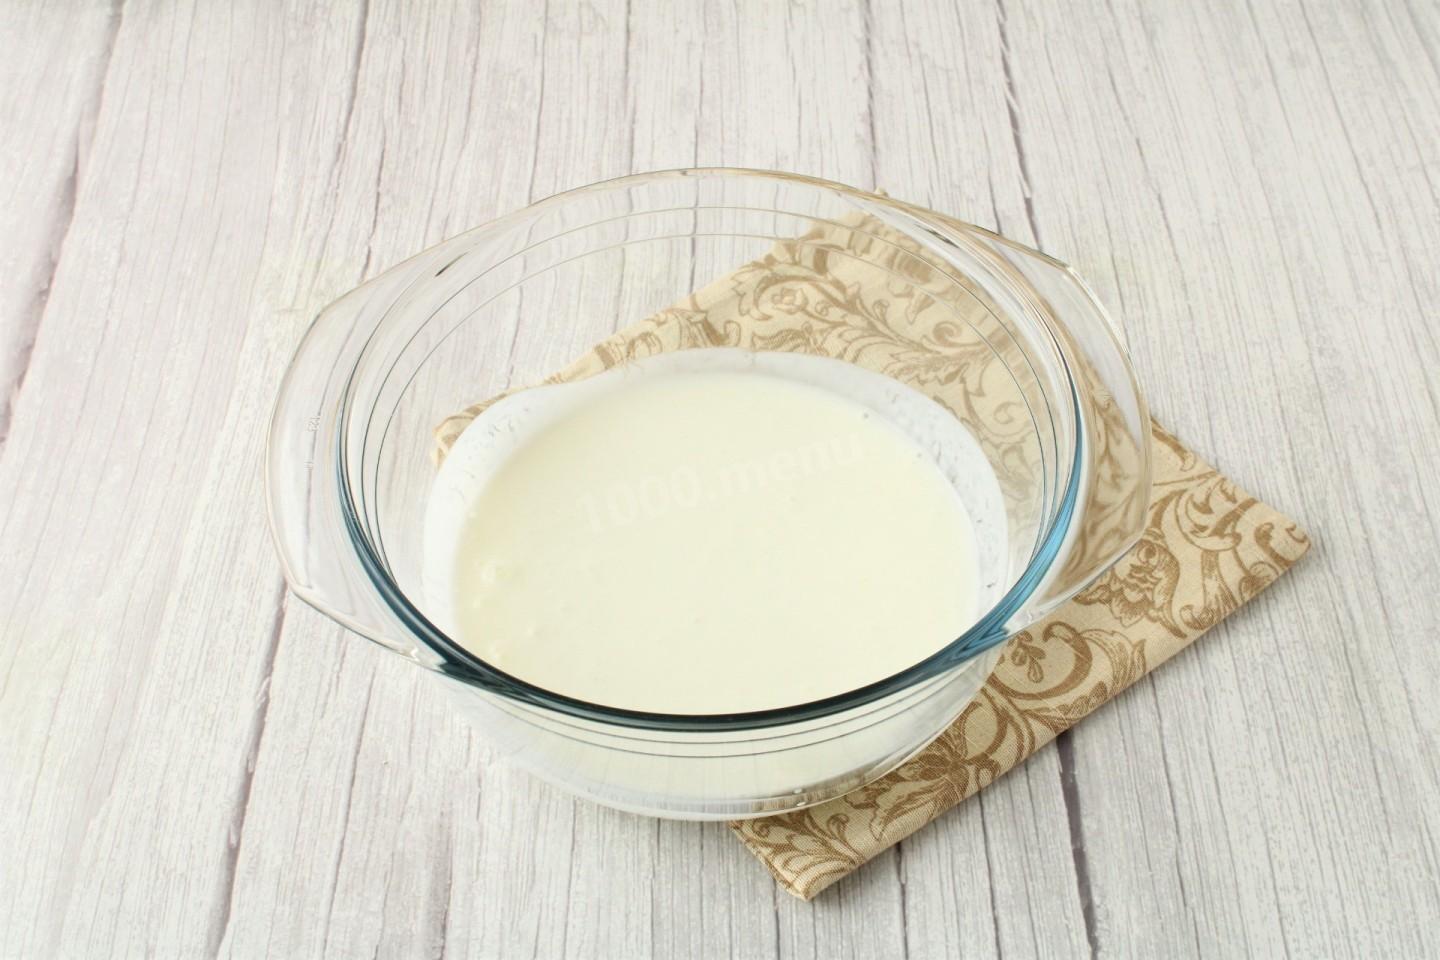 Сыр на кефире в домашних условиях рецепт с фото